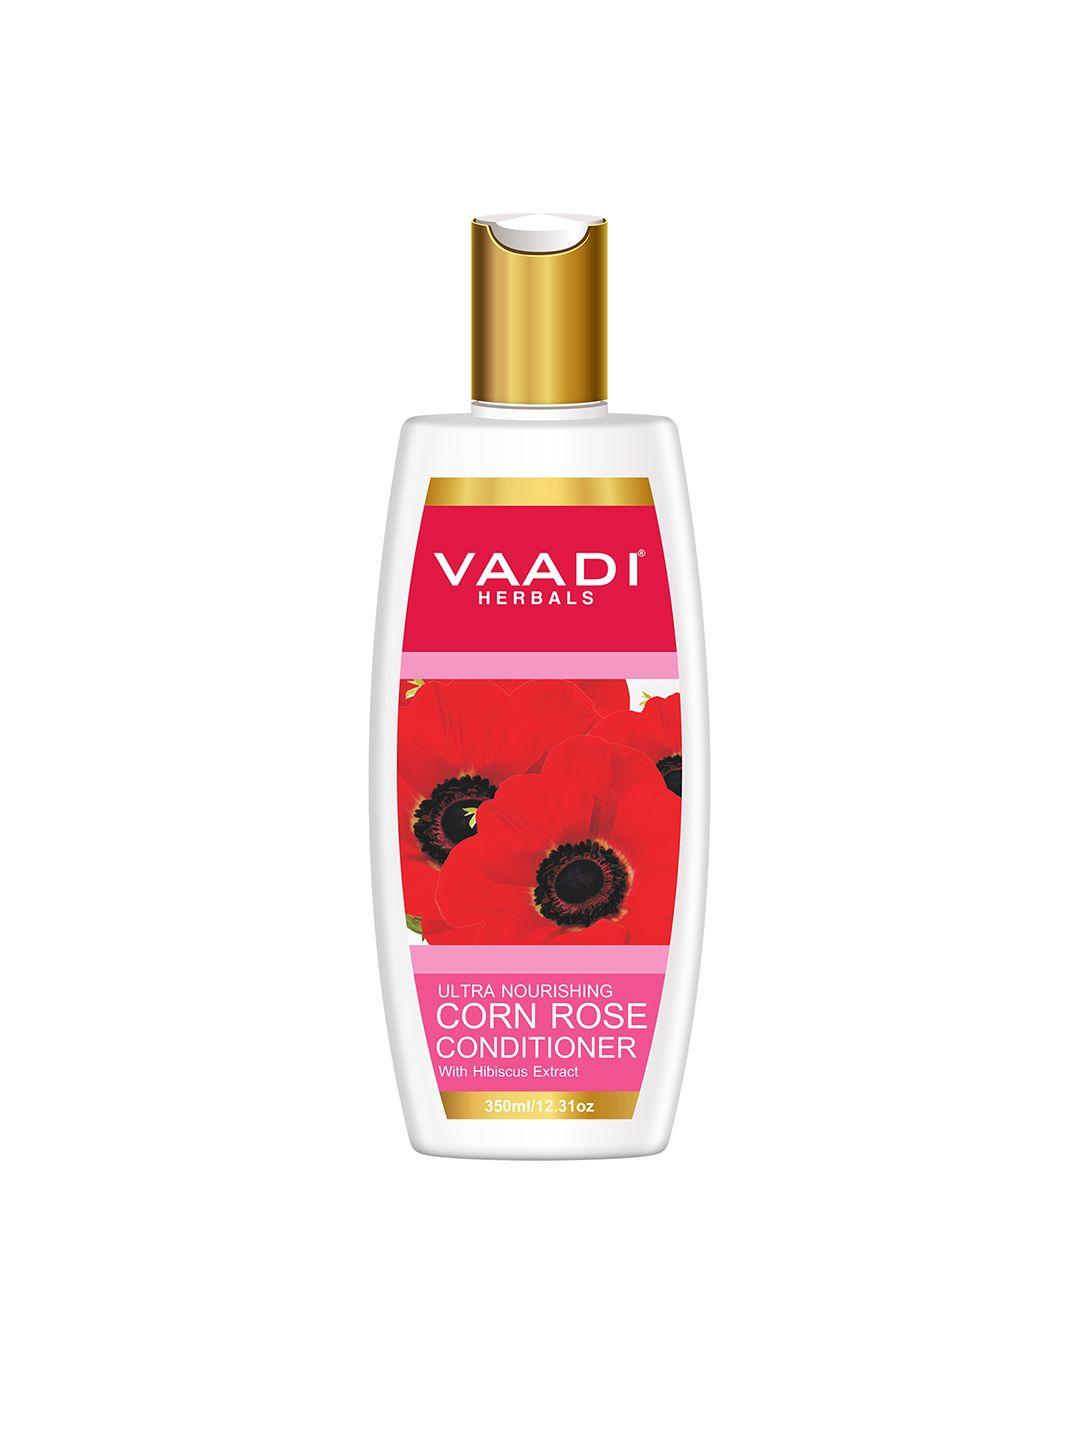 vaadi-herbals-unisex-corn-rose-with-hibiscus-extract-conditioner-350-ml